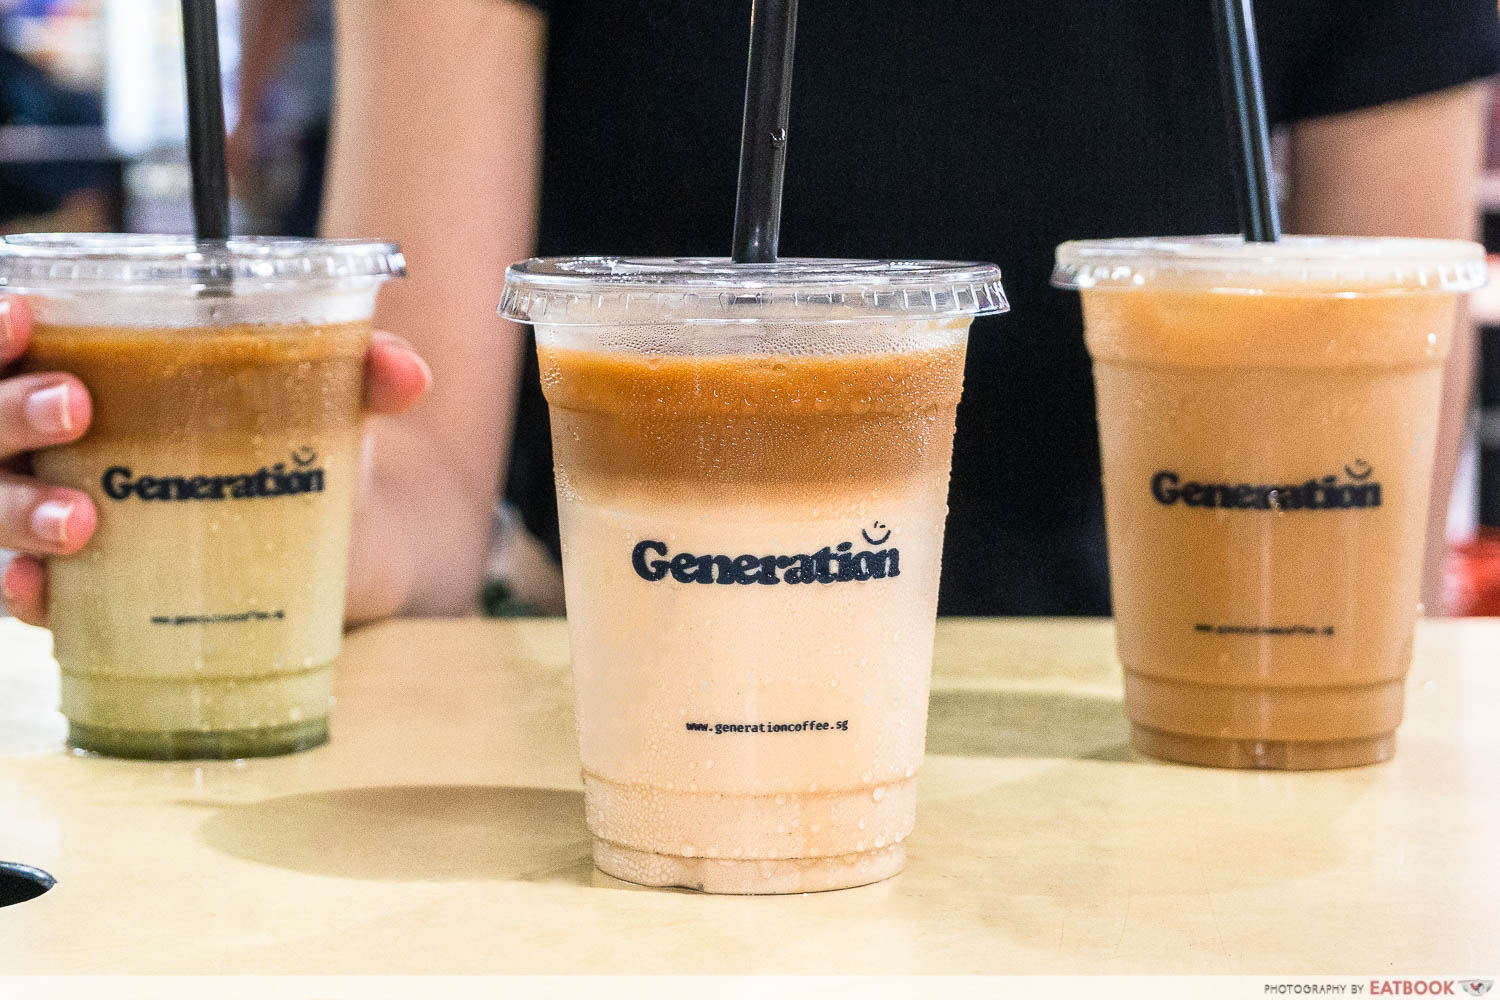 generation coffee iced drinks